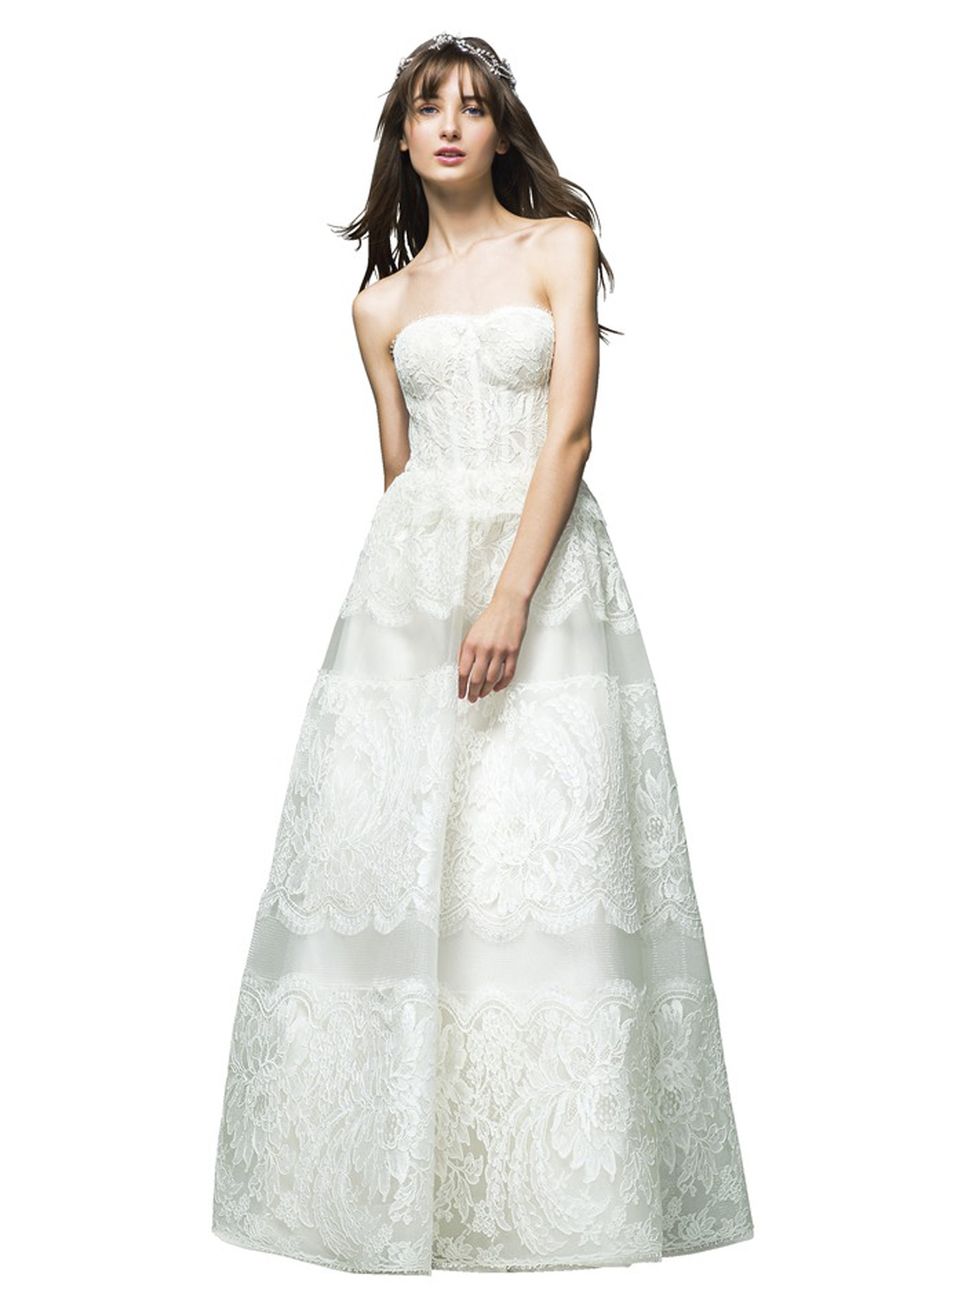 Gown, Clothing, Dress, Wedding dress, White, Bridal clothing, Bridal party dress, Fashion model, Shoulder, Strapless dress, 